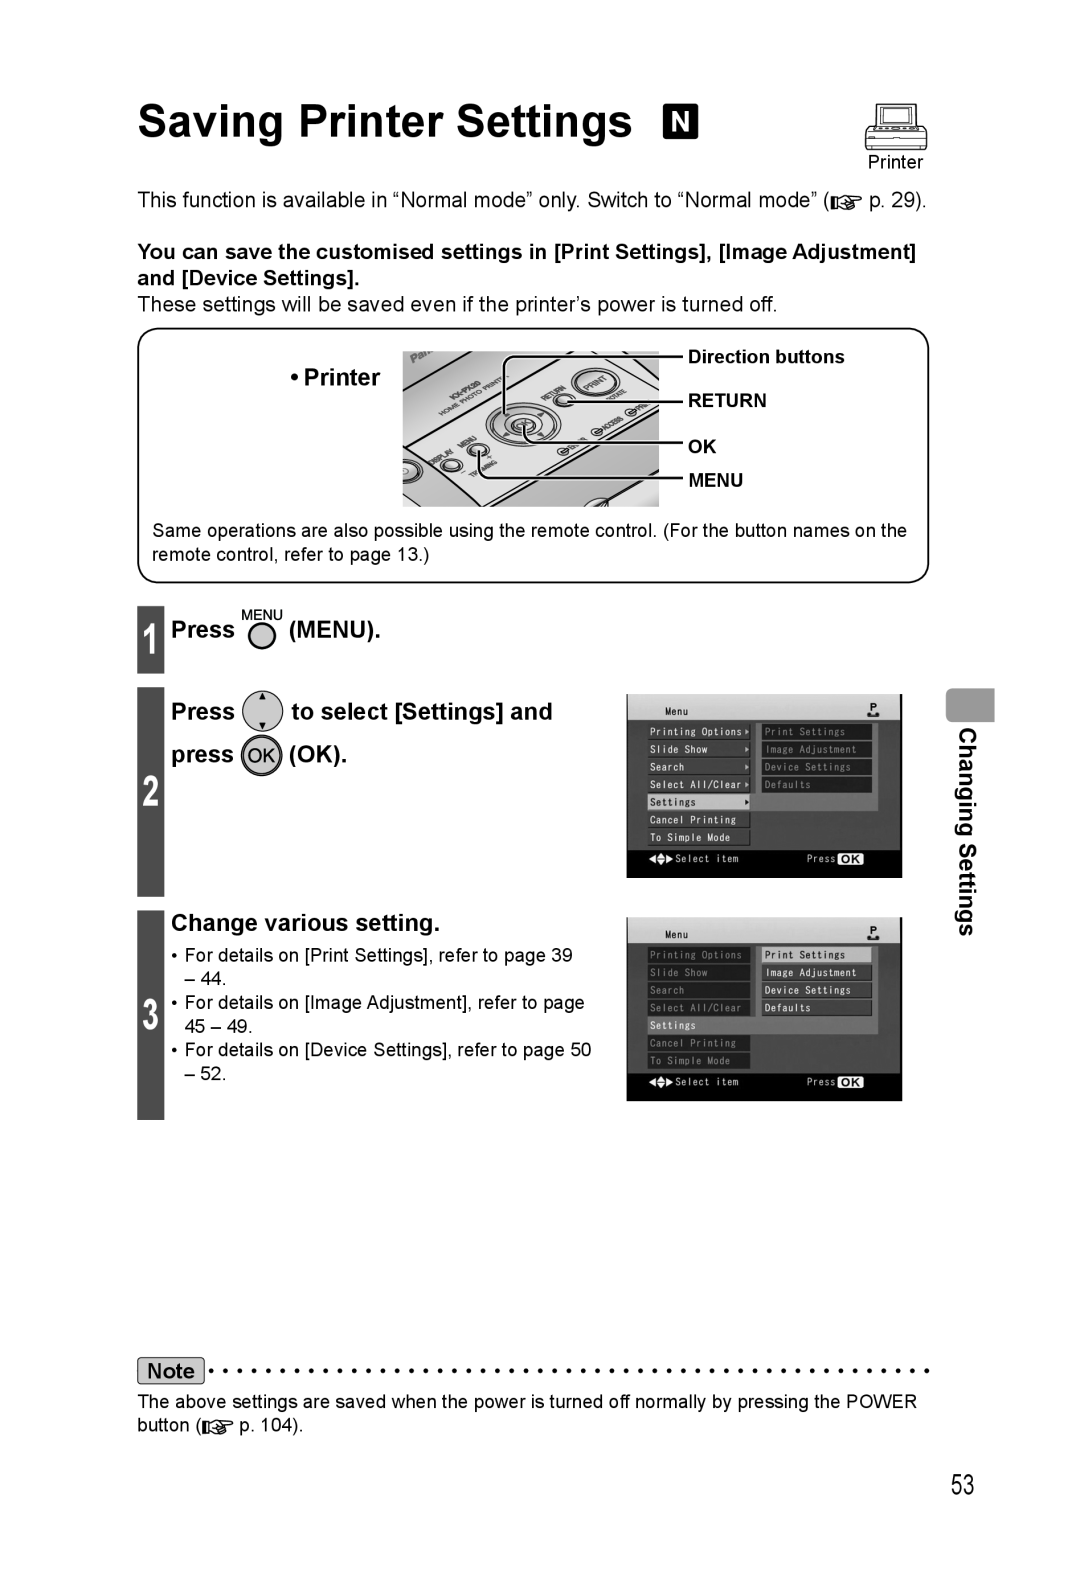 Panasonic KX-PX20M Saving Printer Settings, Change various setting, Press MENU Press to select Settings and press OK 